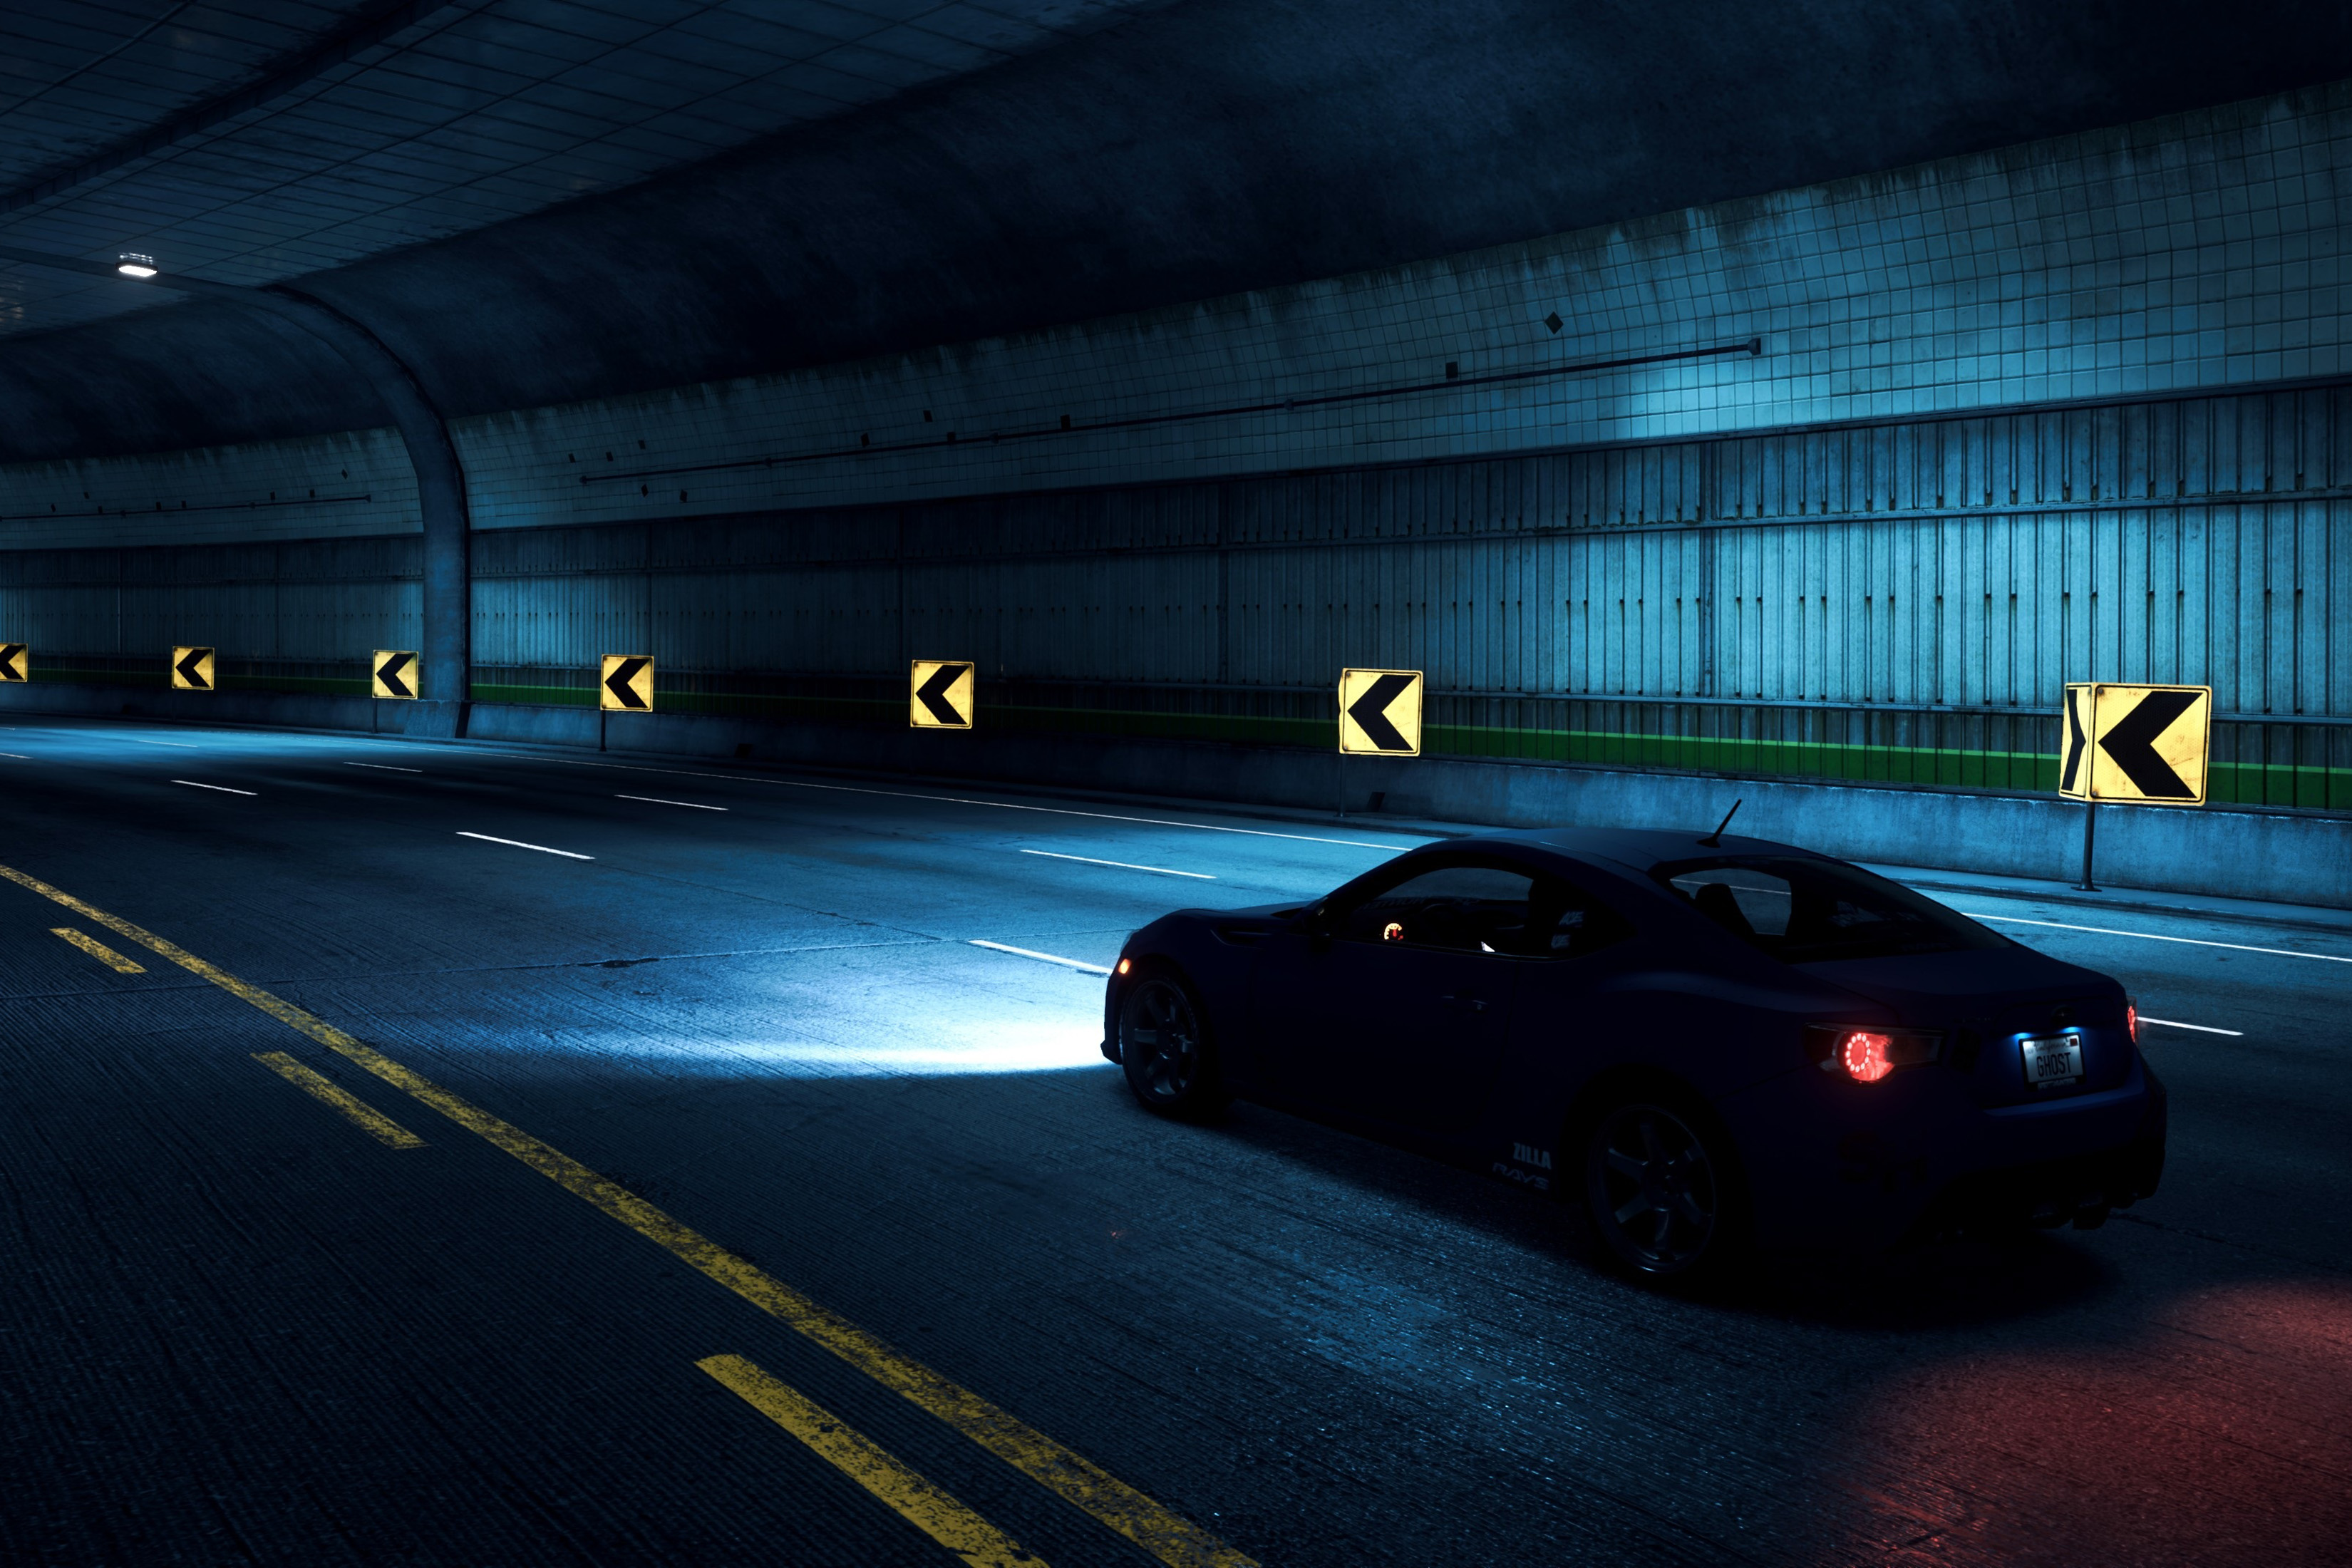 Night drive in tunnel, Car, Drive, Night, Tunnel, HQ Photo